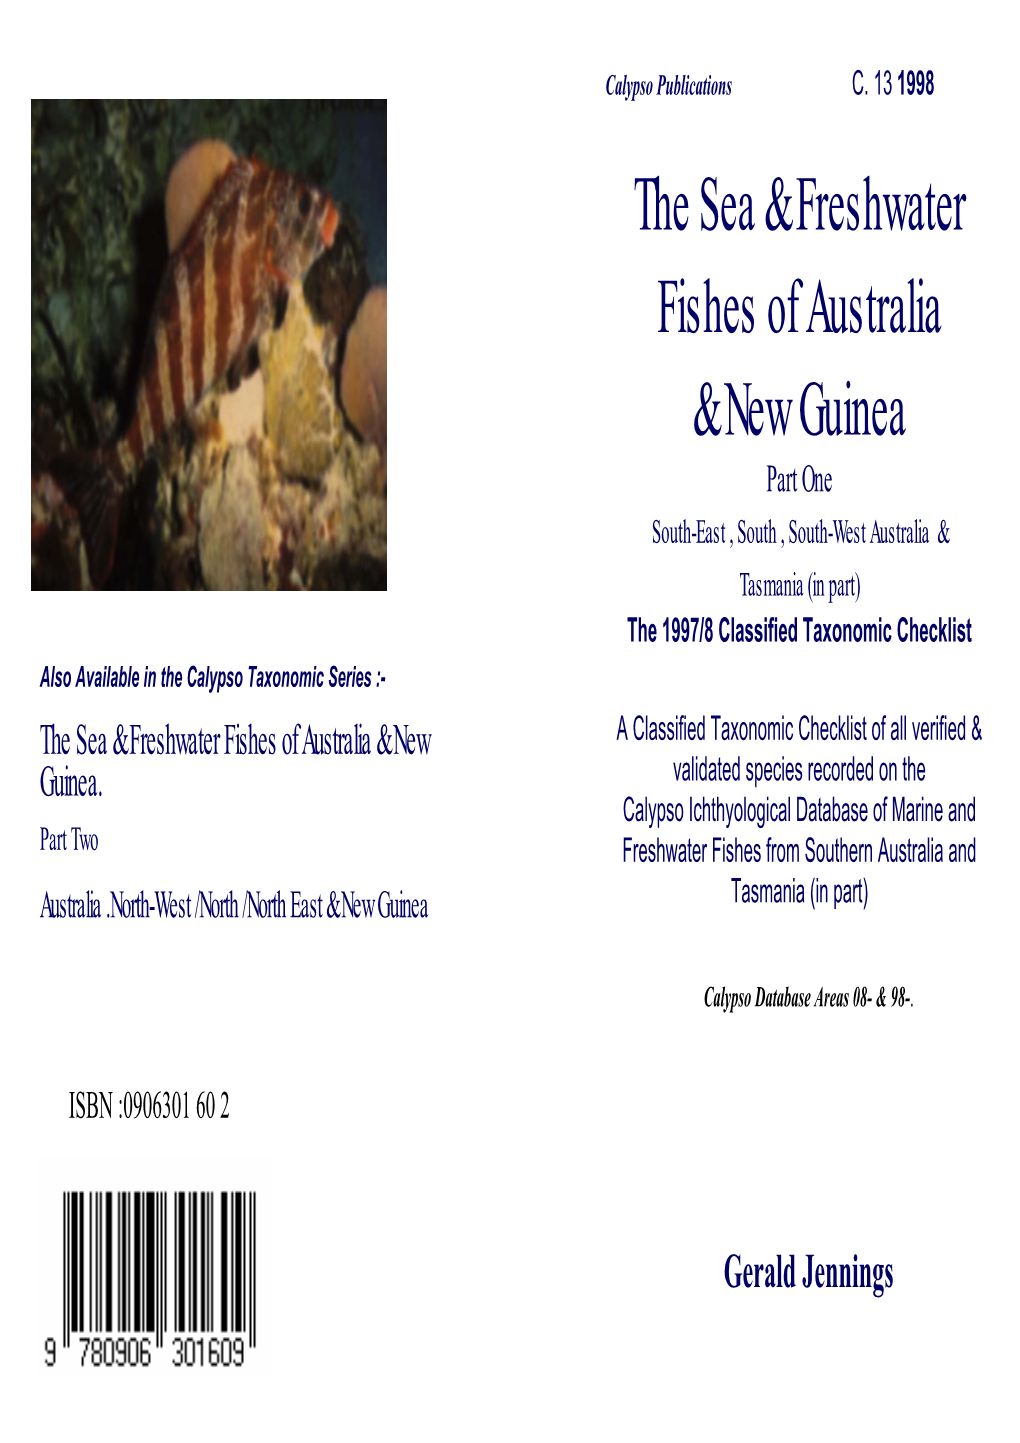 The Sea & Freshwater Fishes of Australia & New Guinea